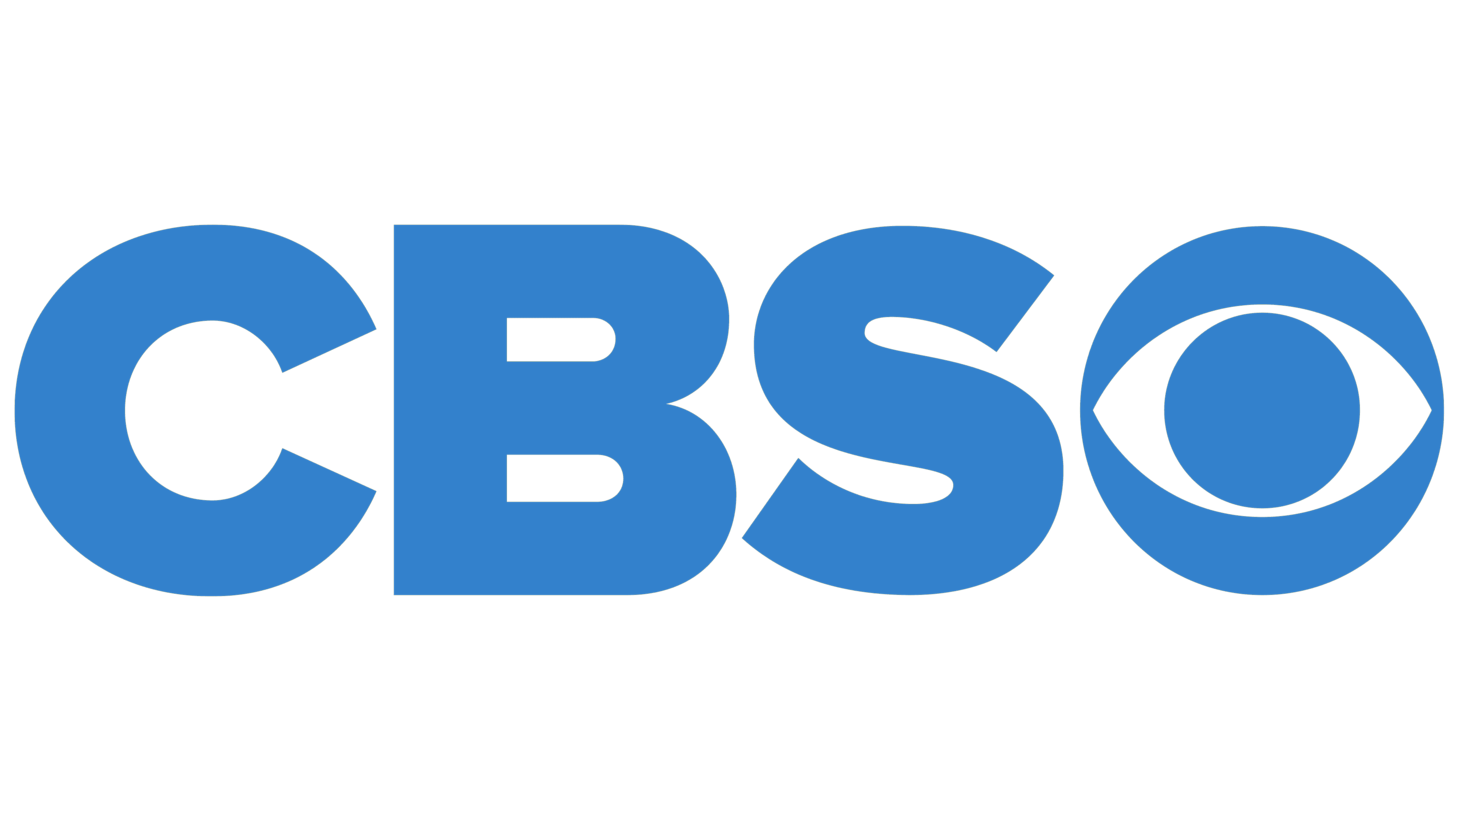 Cbs logo 1